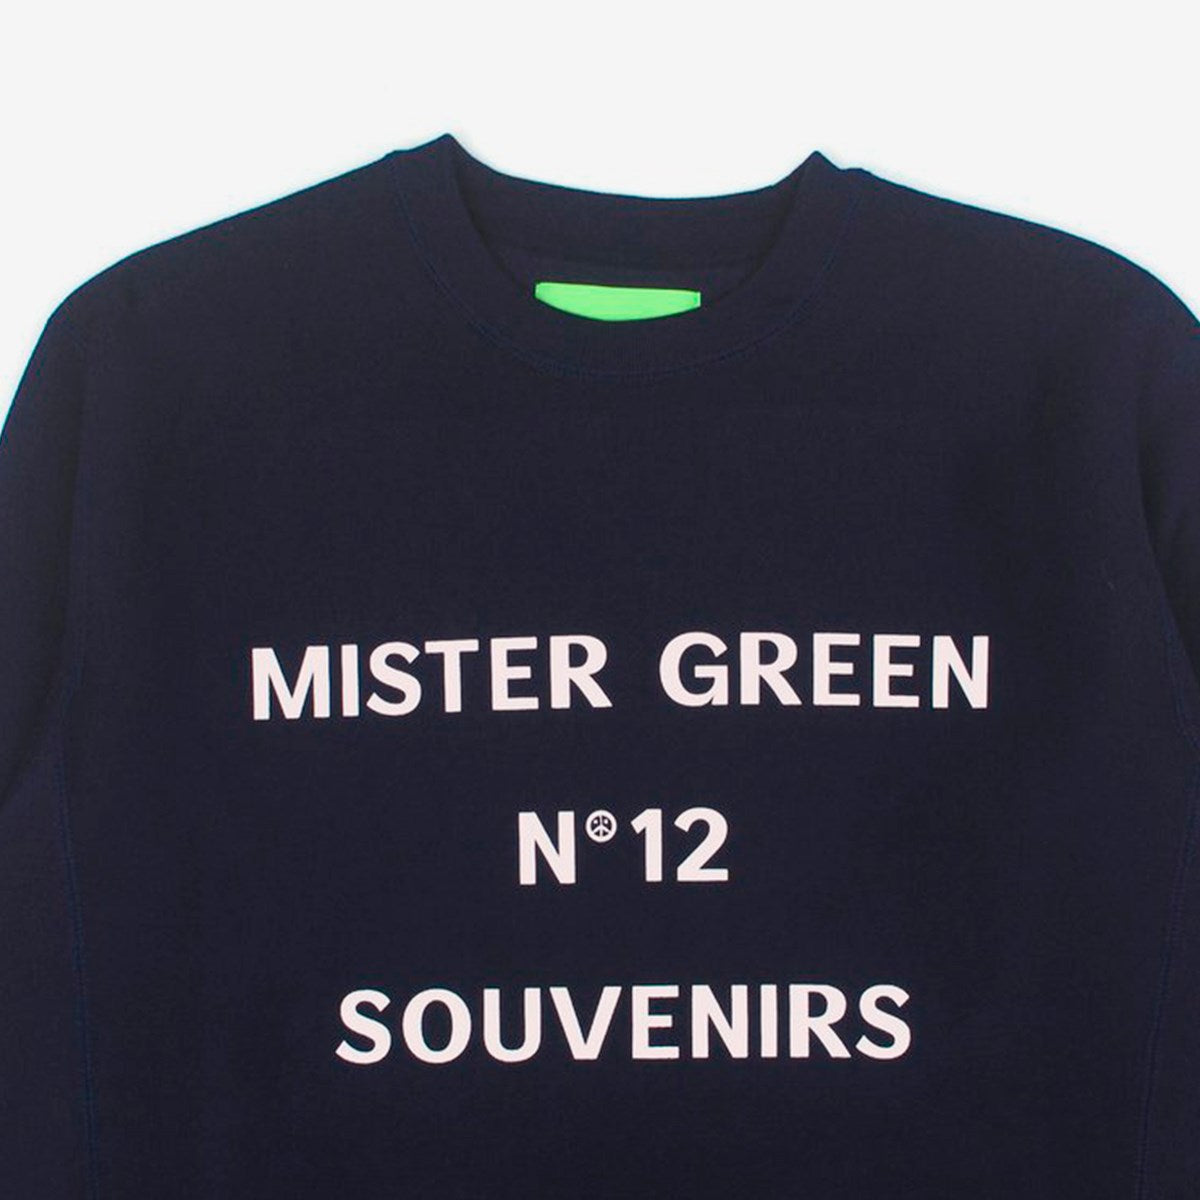 Mister Green - Sweat - No. 12 Souvenirs - Sweat - Navy